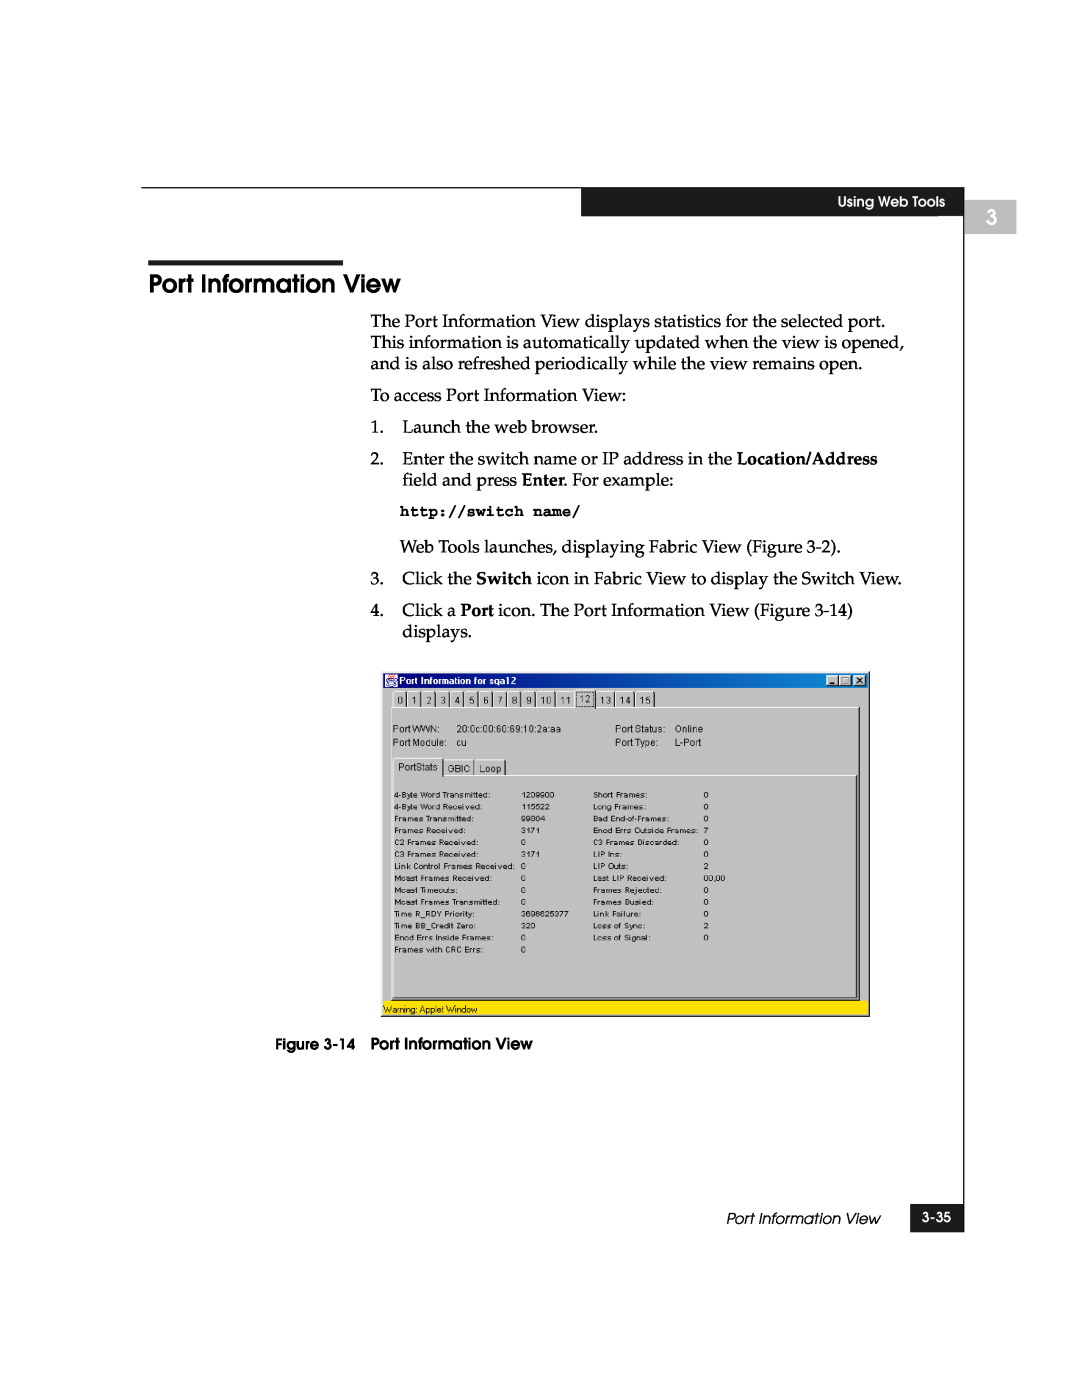 EMC DS-8B manual 14 Port Information View 